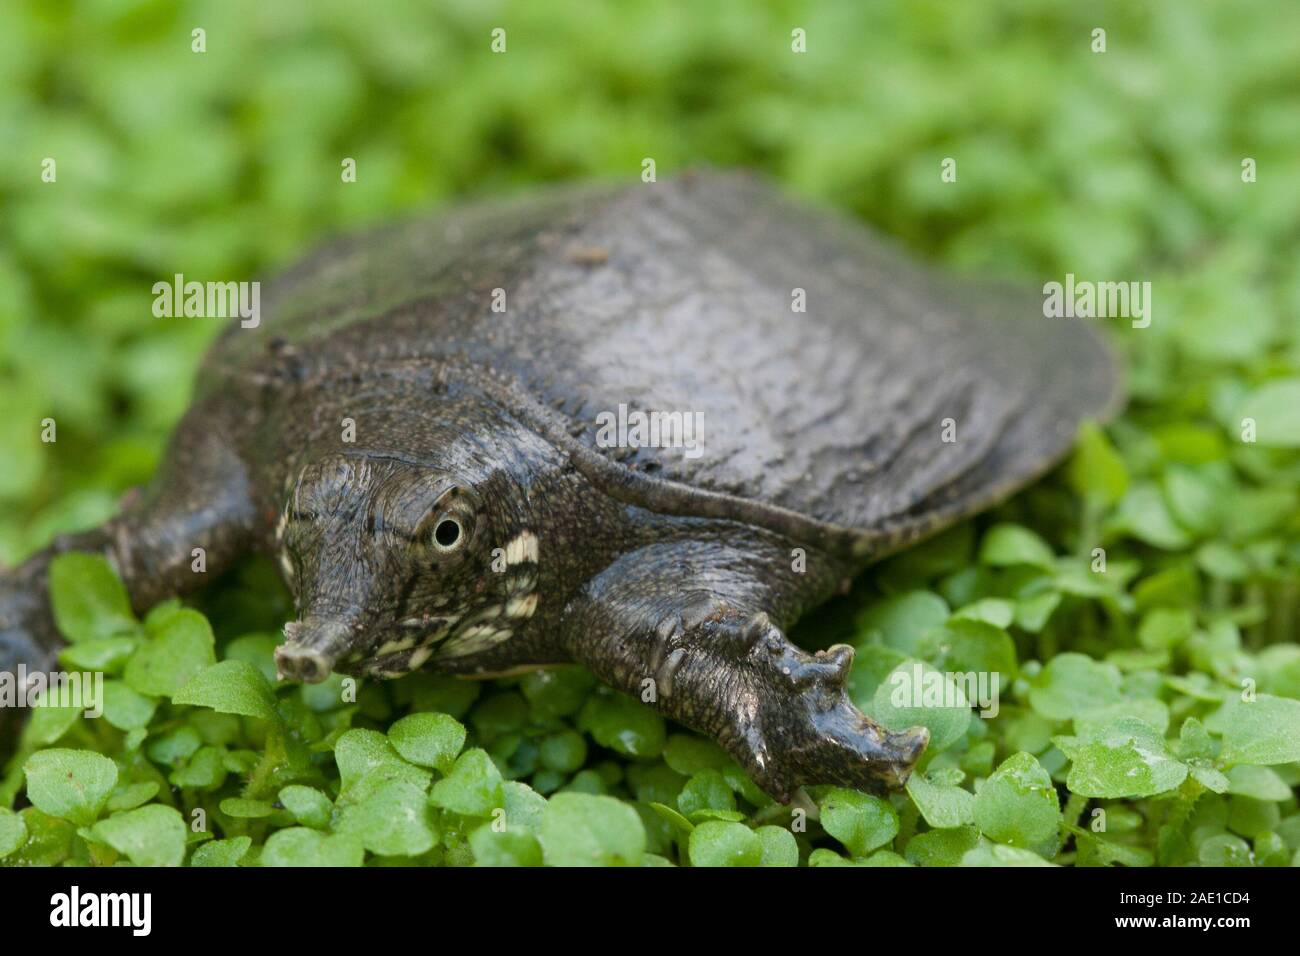 Common softshell turtle or asiatic softshell turtle (Amyda cartilaginea) Stock Photo